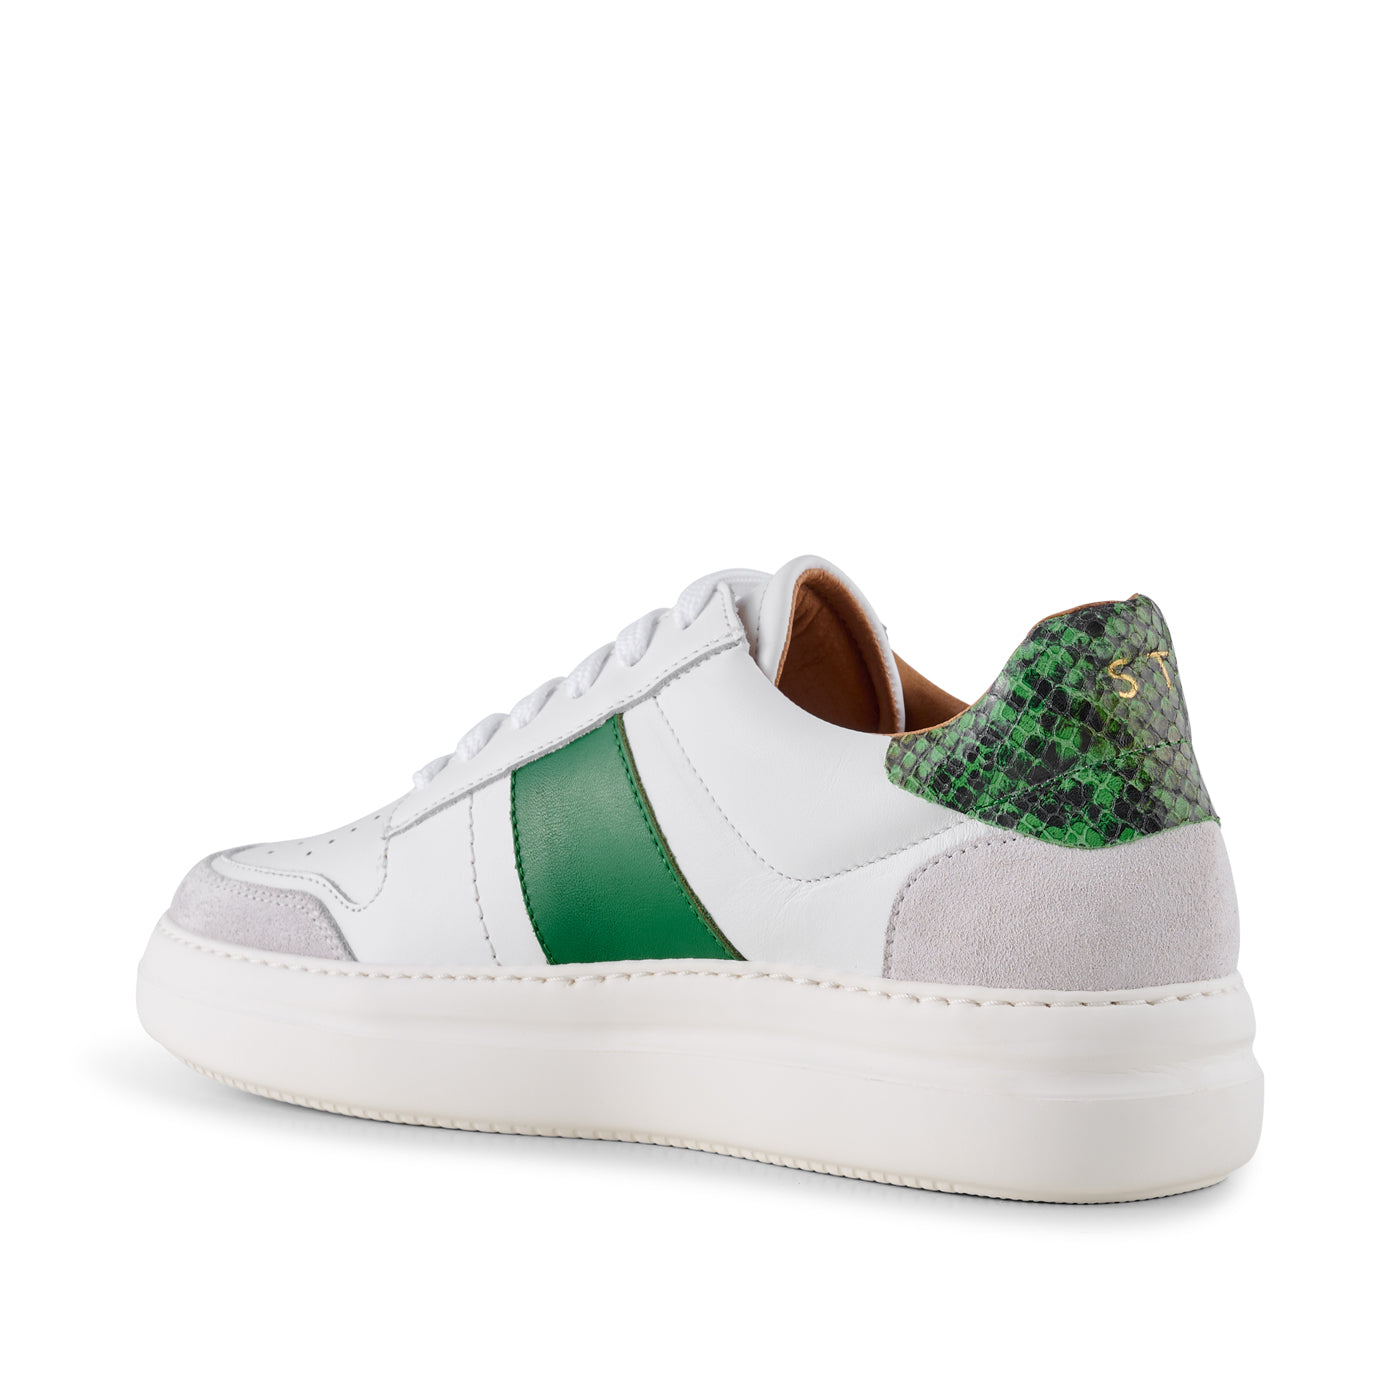 SHOE THE BEAR WOMENS Vinca sneaker leather Sneakers 835 WHITE/GREEN MULTI